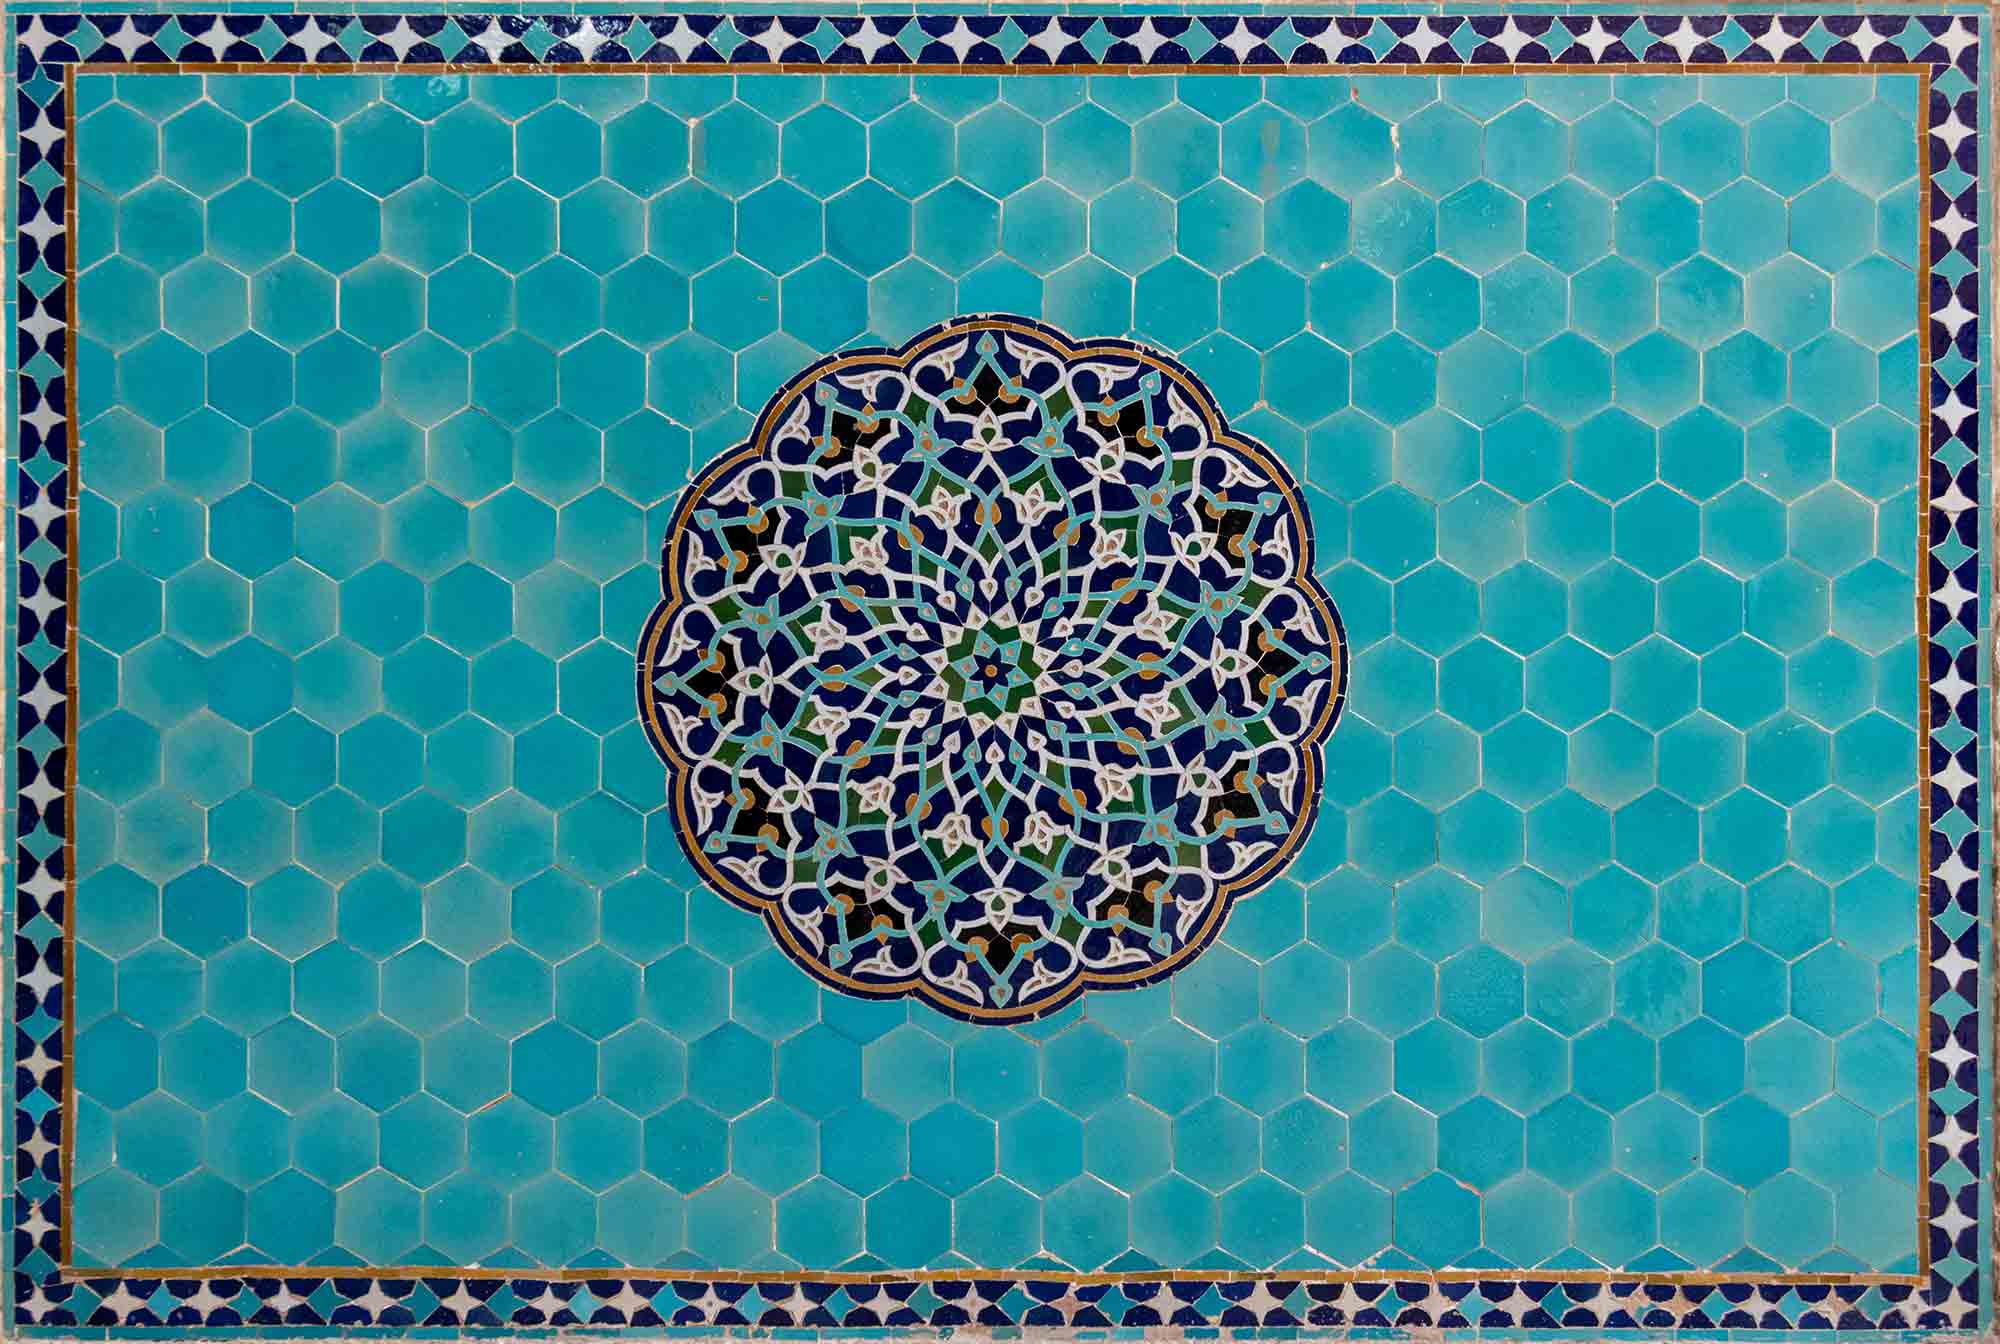 A mosaic of blue tiles.